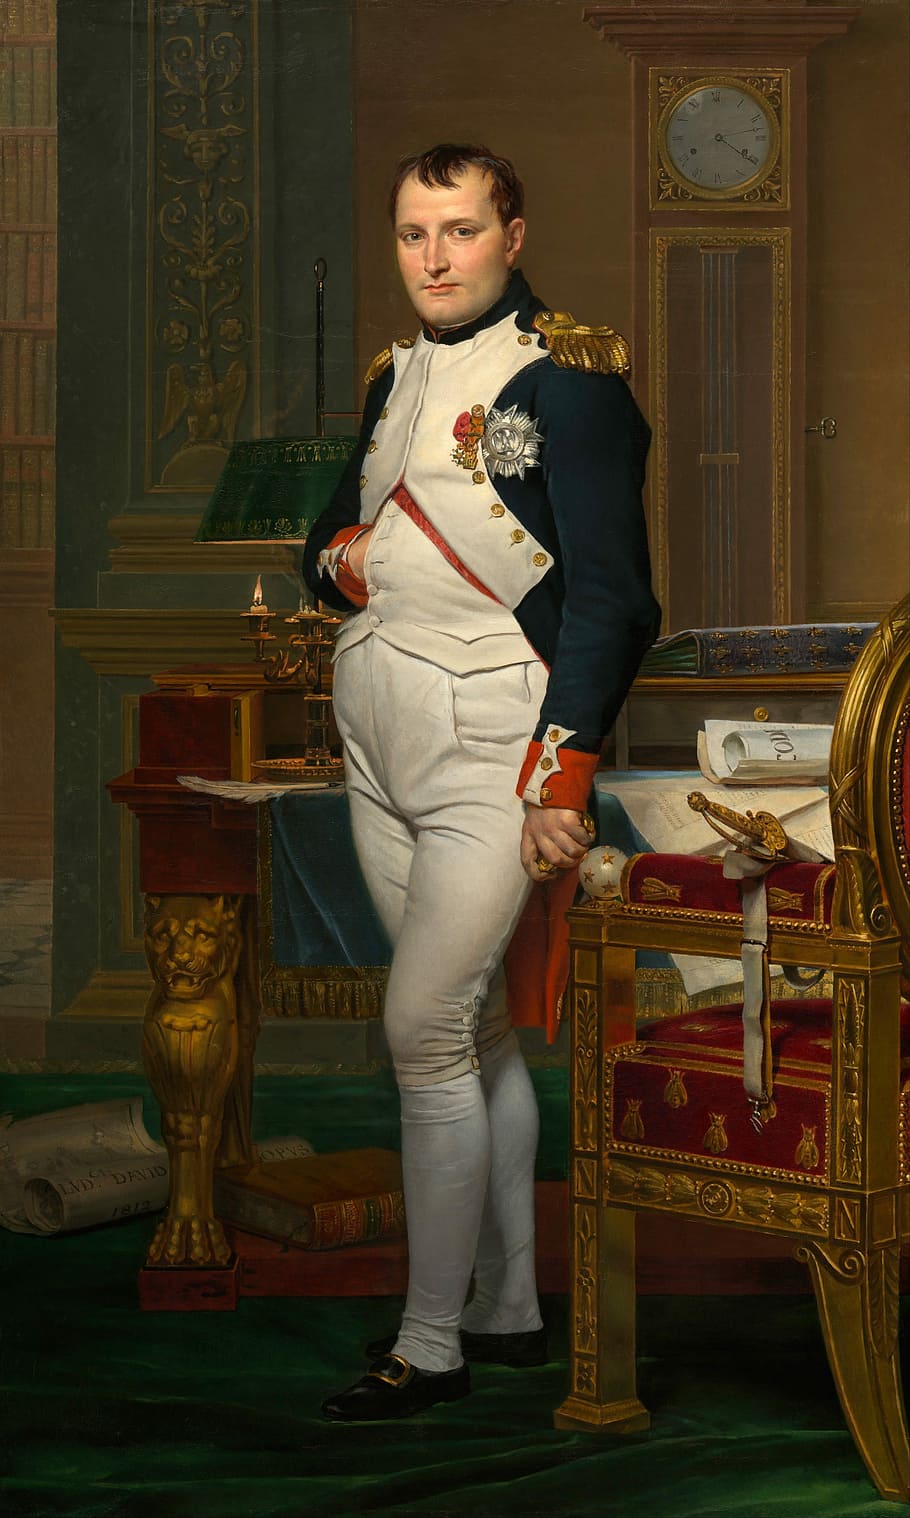 emperor napolean, Portrait, Emperor, Napolean, french, public domain, people, one Person, elegance, caucasian Ethnicity